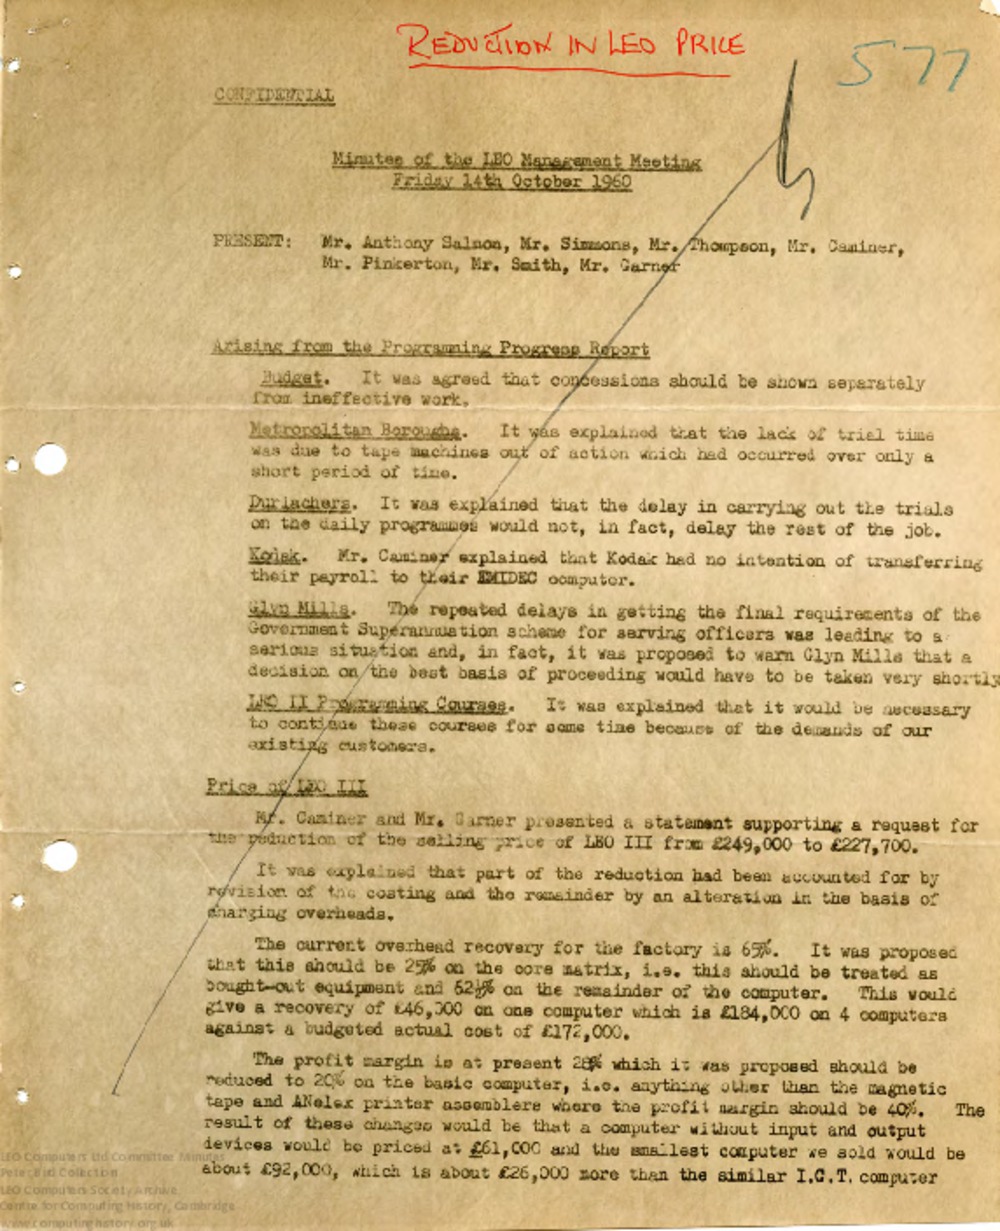 Article: 63499 LEO Management Meeting, 1960 fourth quarter (Oct-Dec 1960)